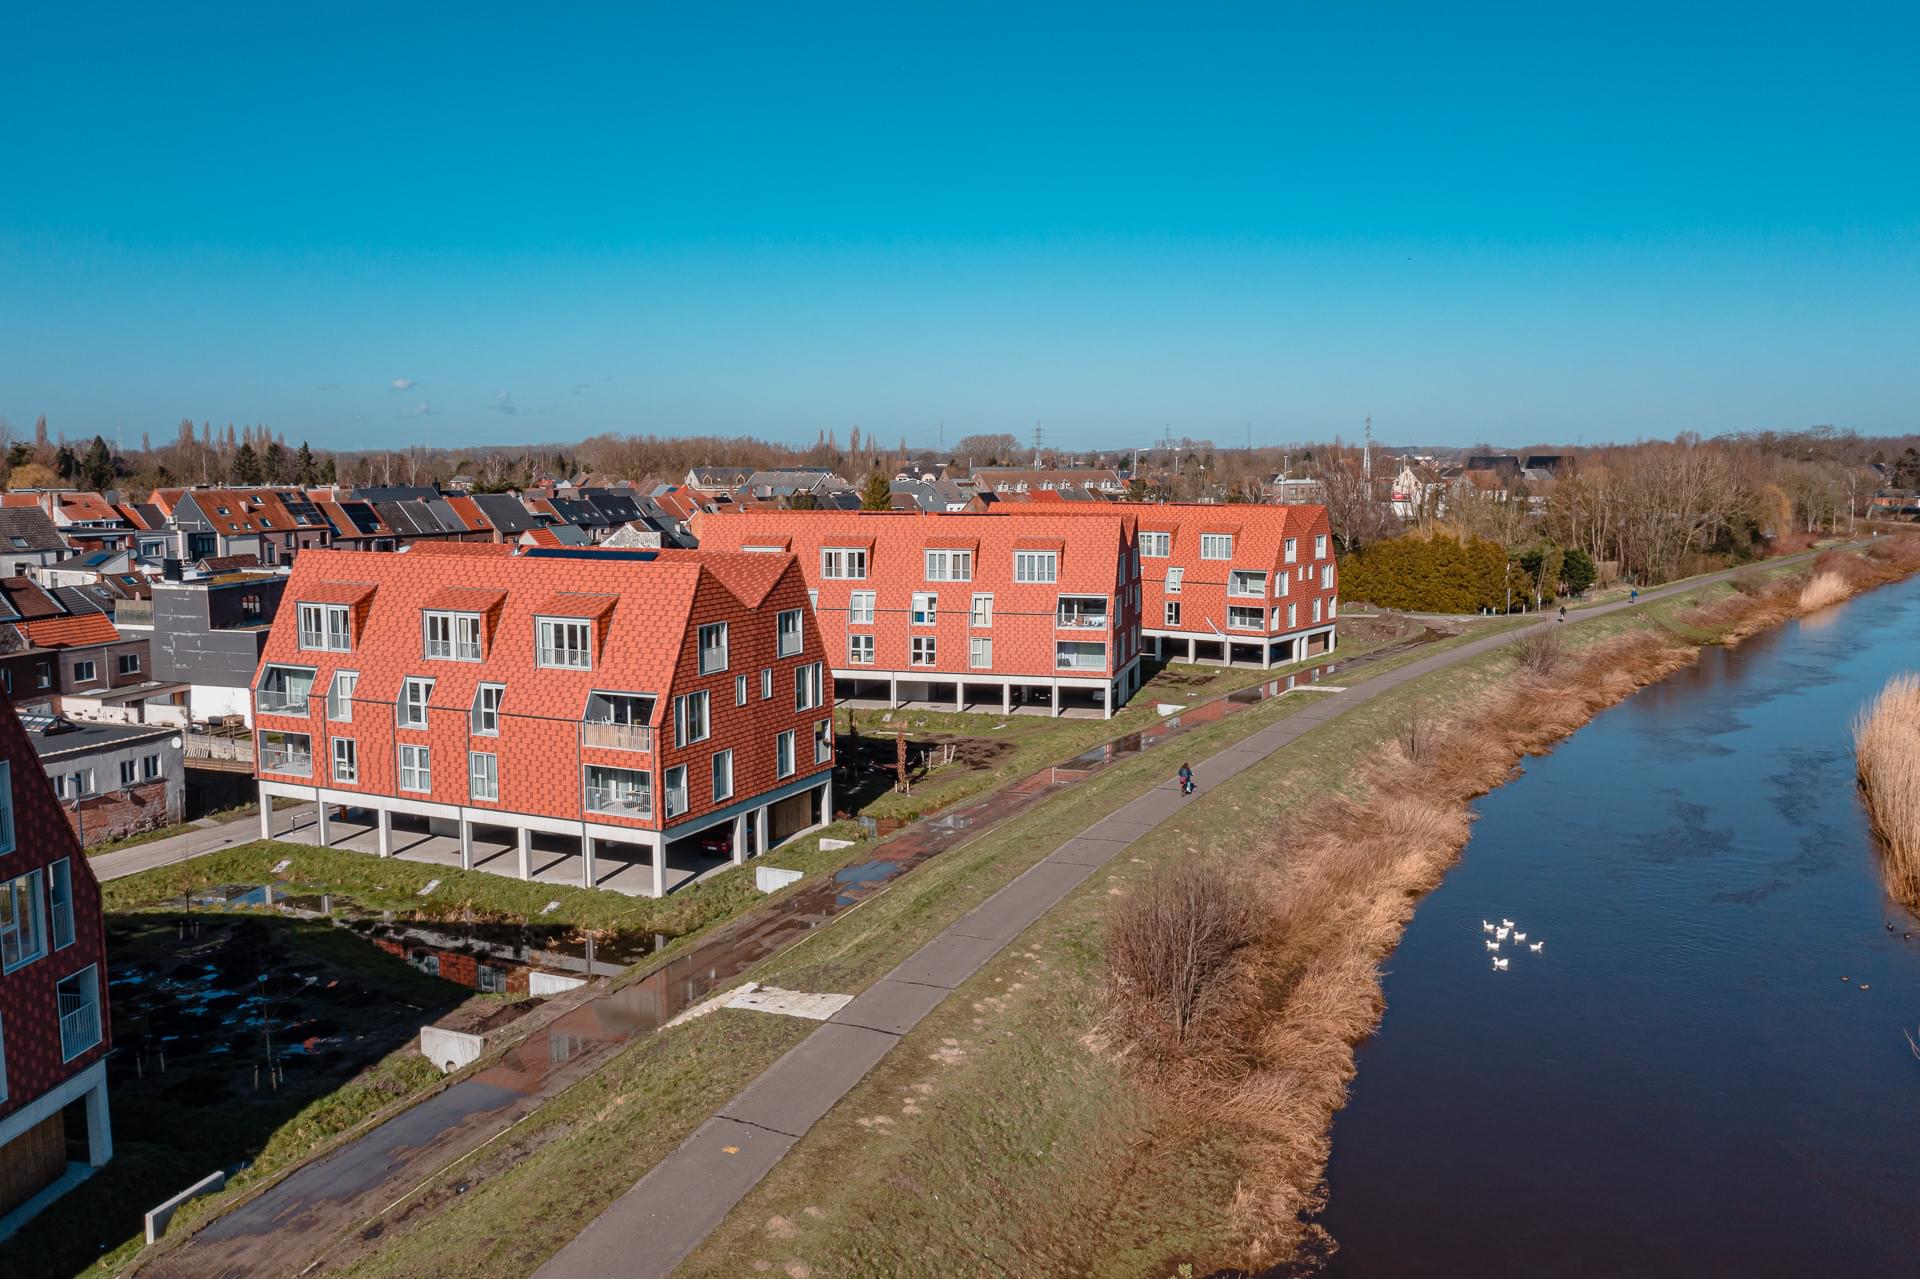 Residentie Netheland - Lier - Hooyberghs - B&R Bouwgroep (3)